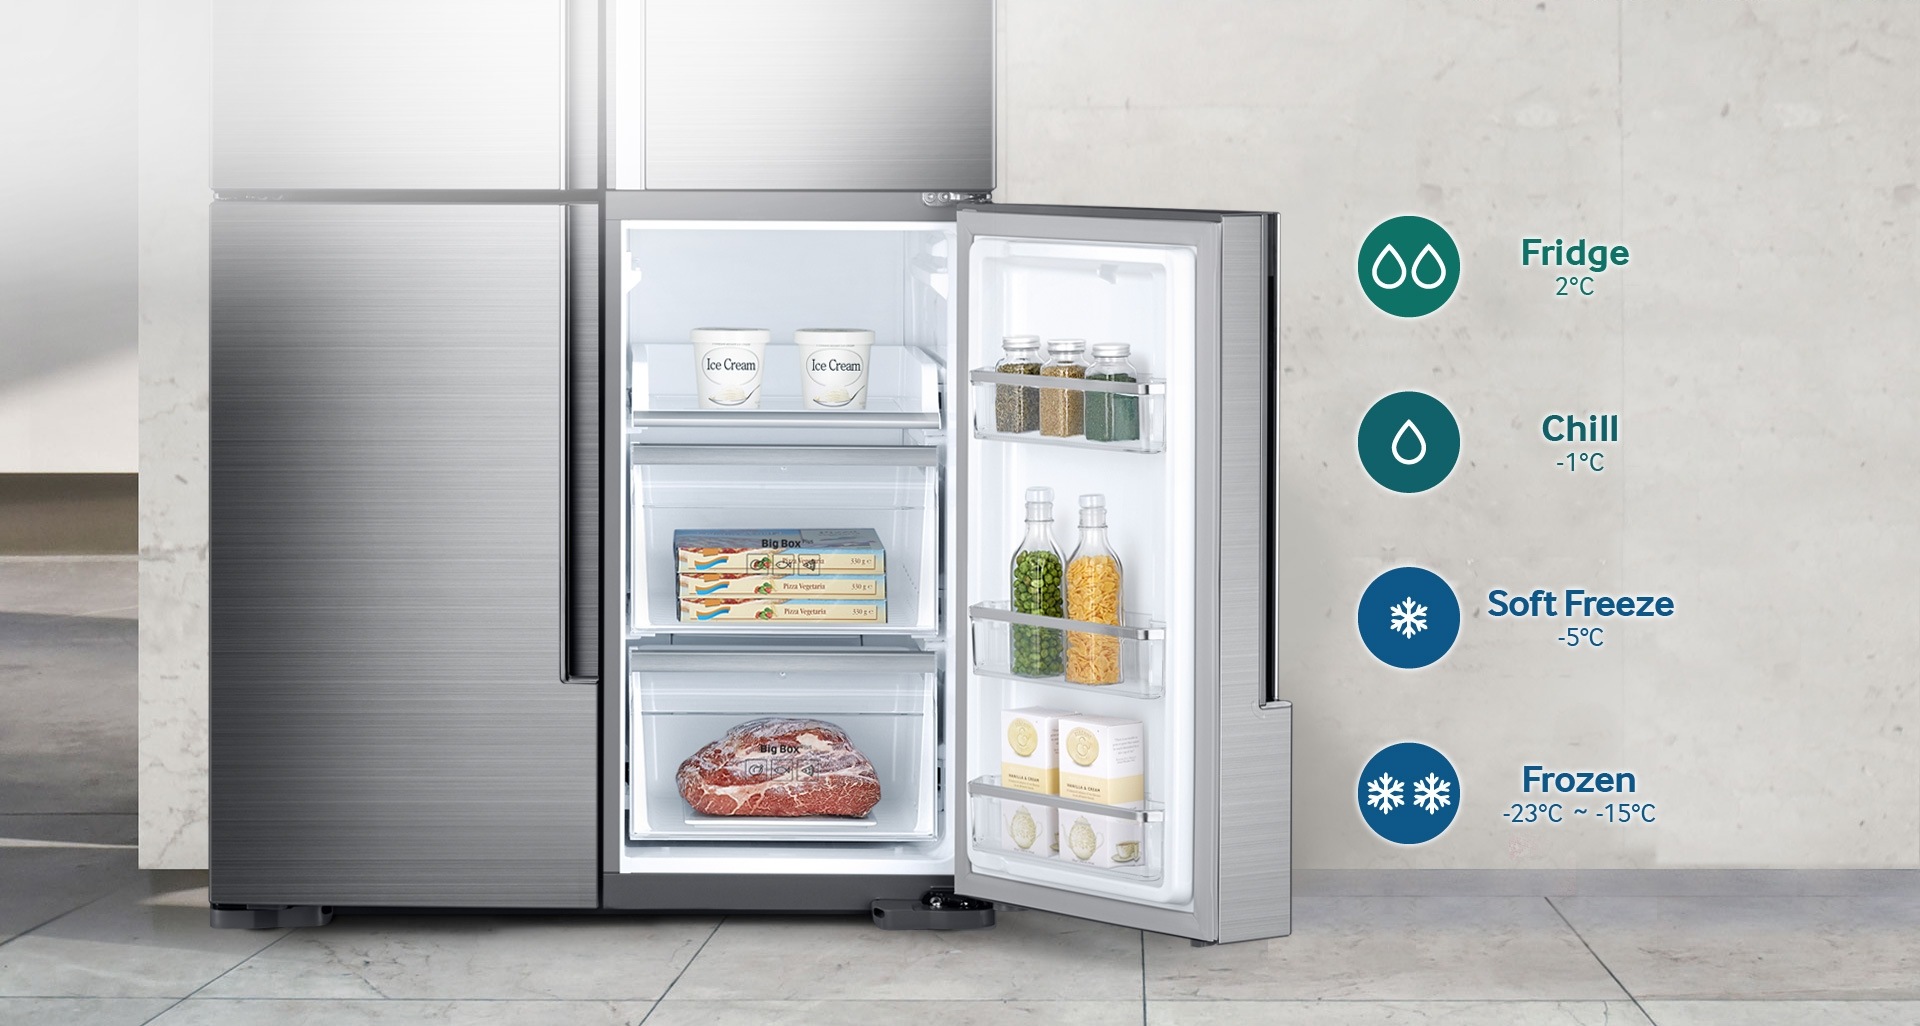 More fridge or freezer space on demand